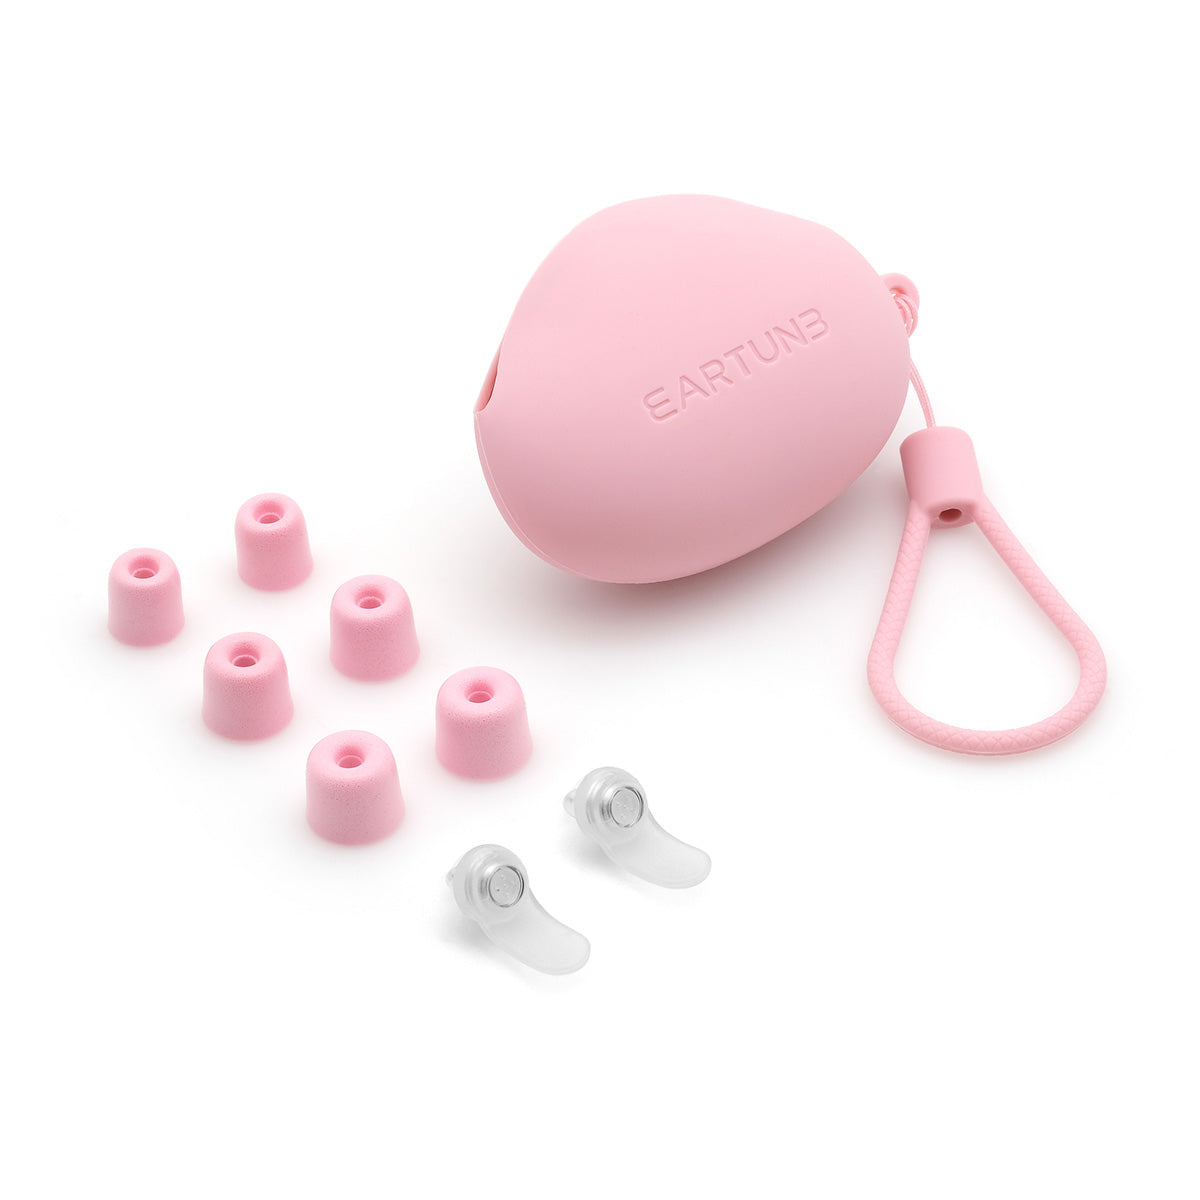 ADV. Eartune Live Foam Musician Concert Ear Plugs Filter High Fidelity Memory Foam #color_rose-pink